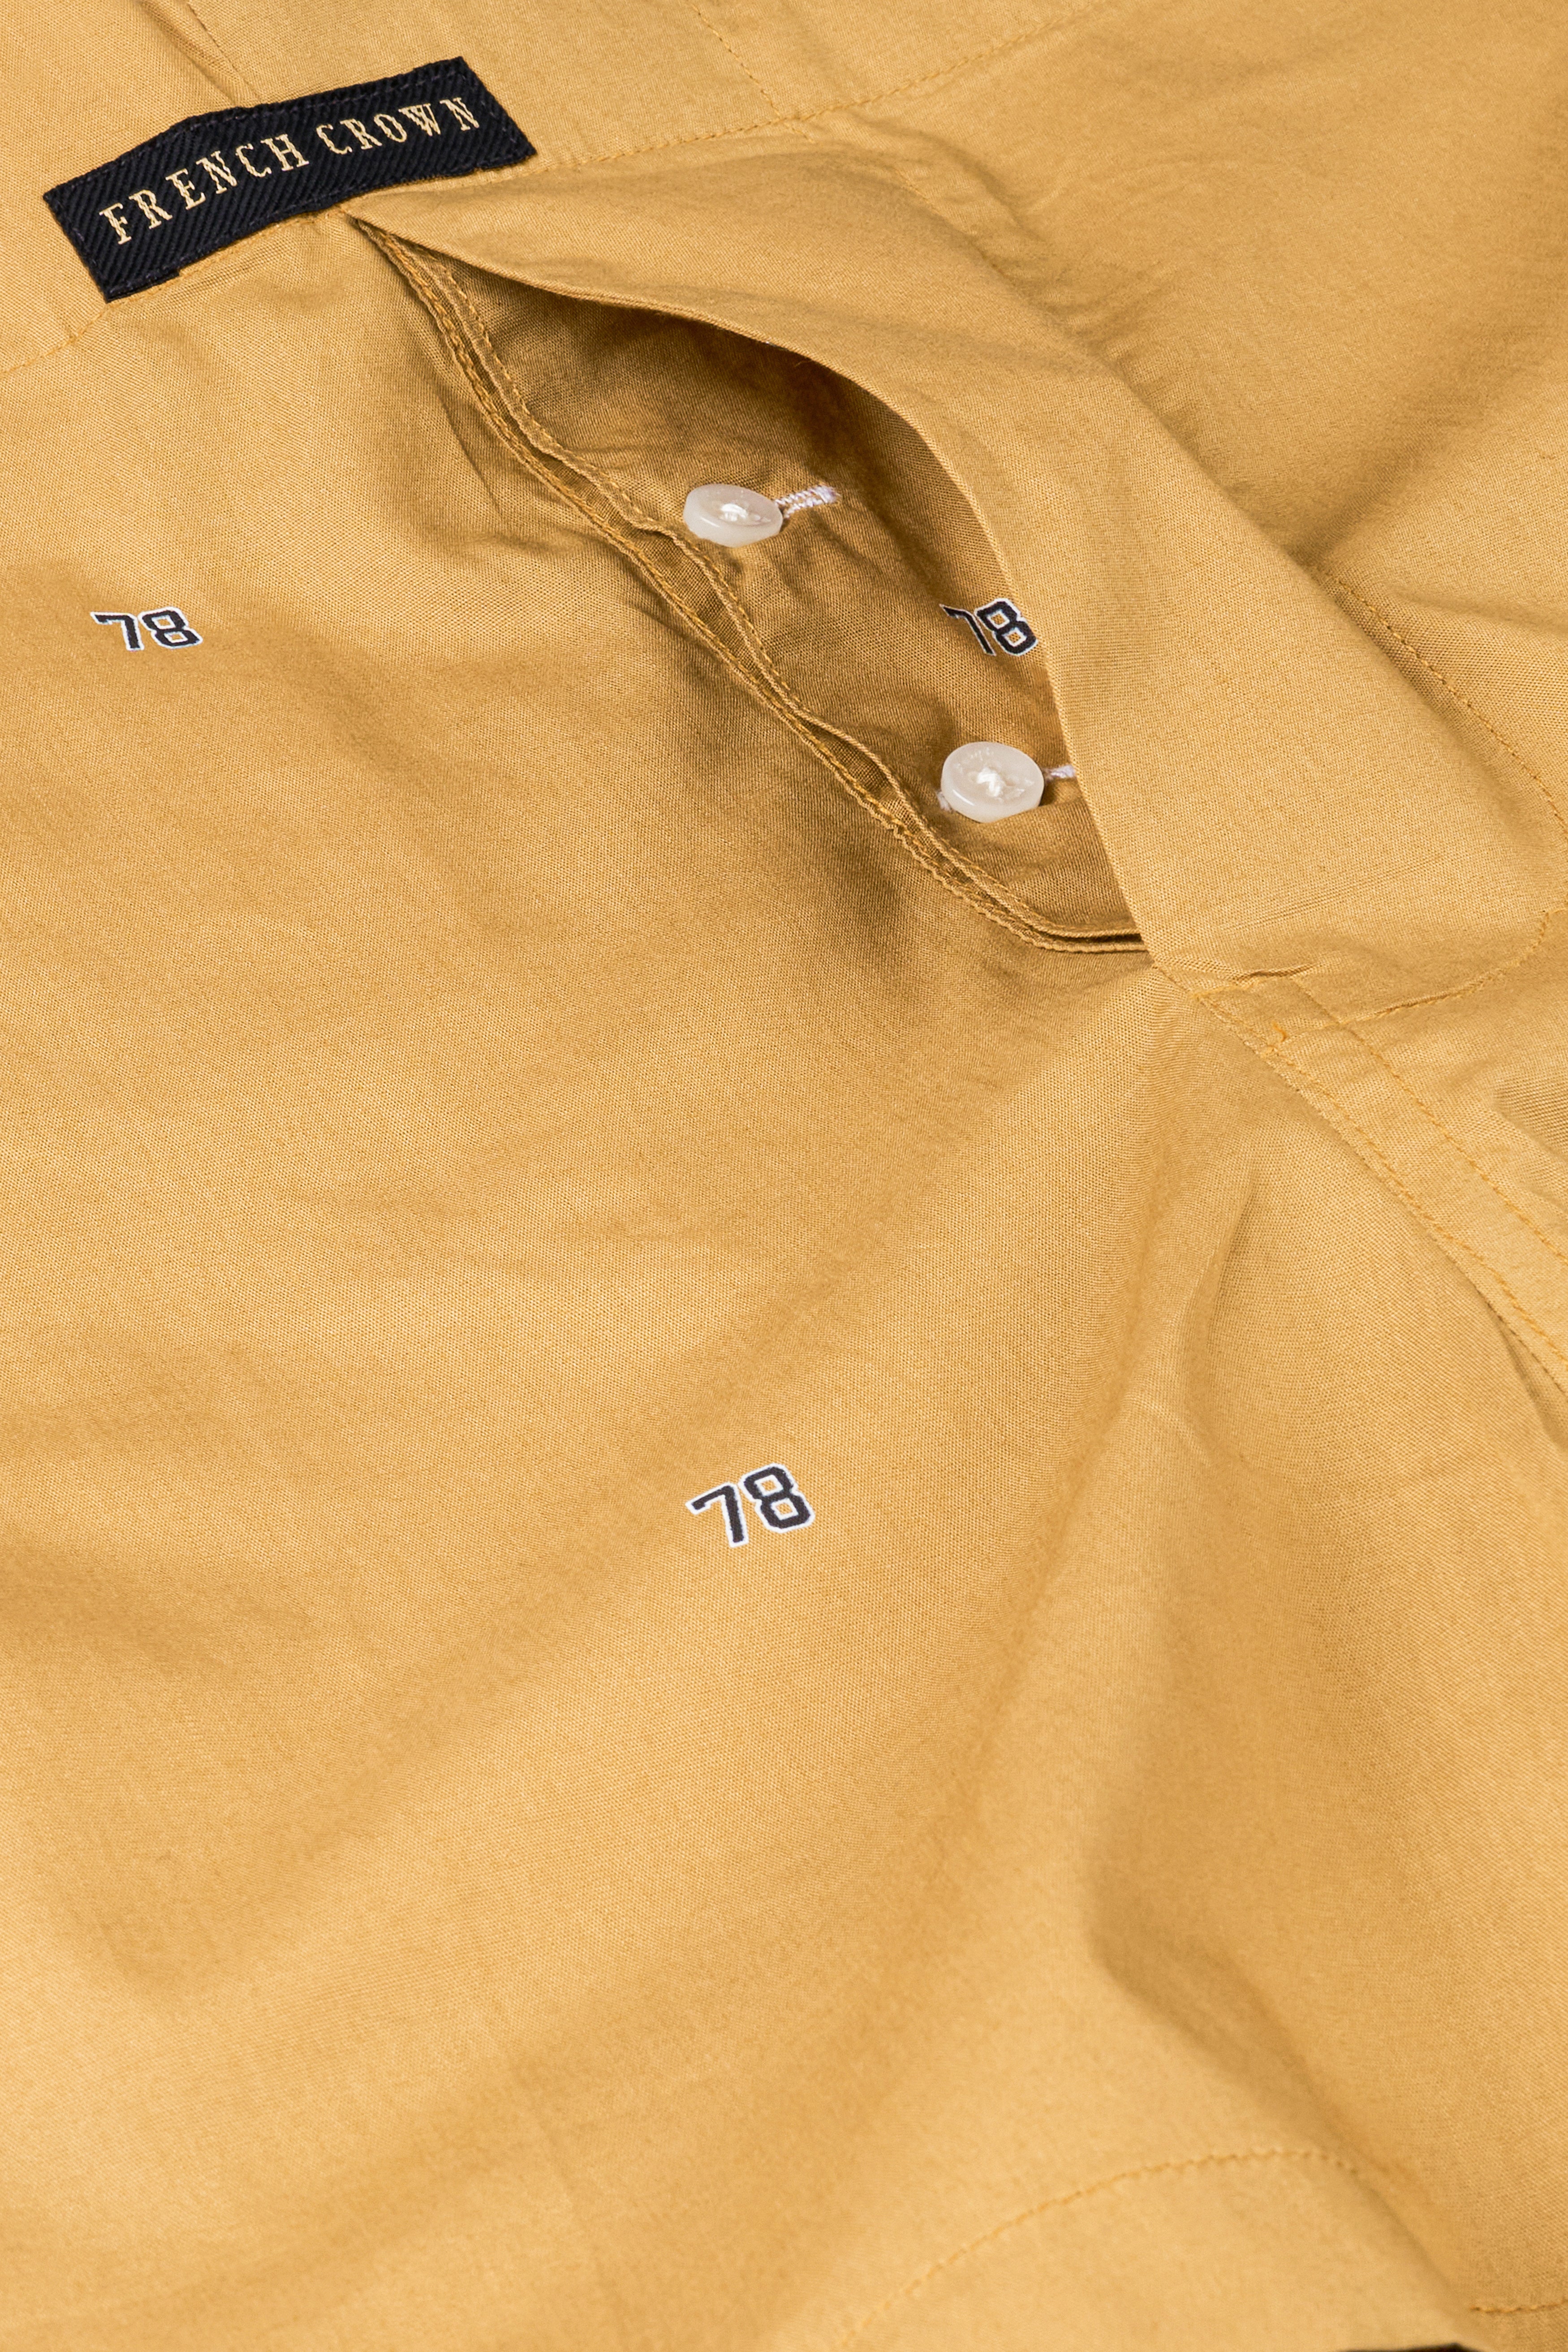 Desert Yellow Printed Premium Cotton Boxer BX559-28, BX559-30, BX559-32, BX559-34, BX559-36, BX559-38, BX559-40, BX559-42, BX559-44